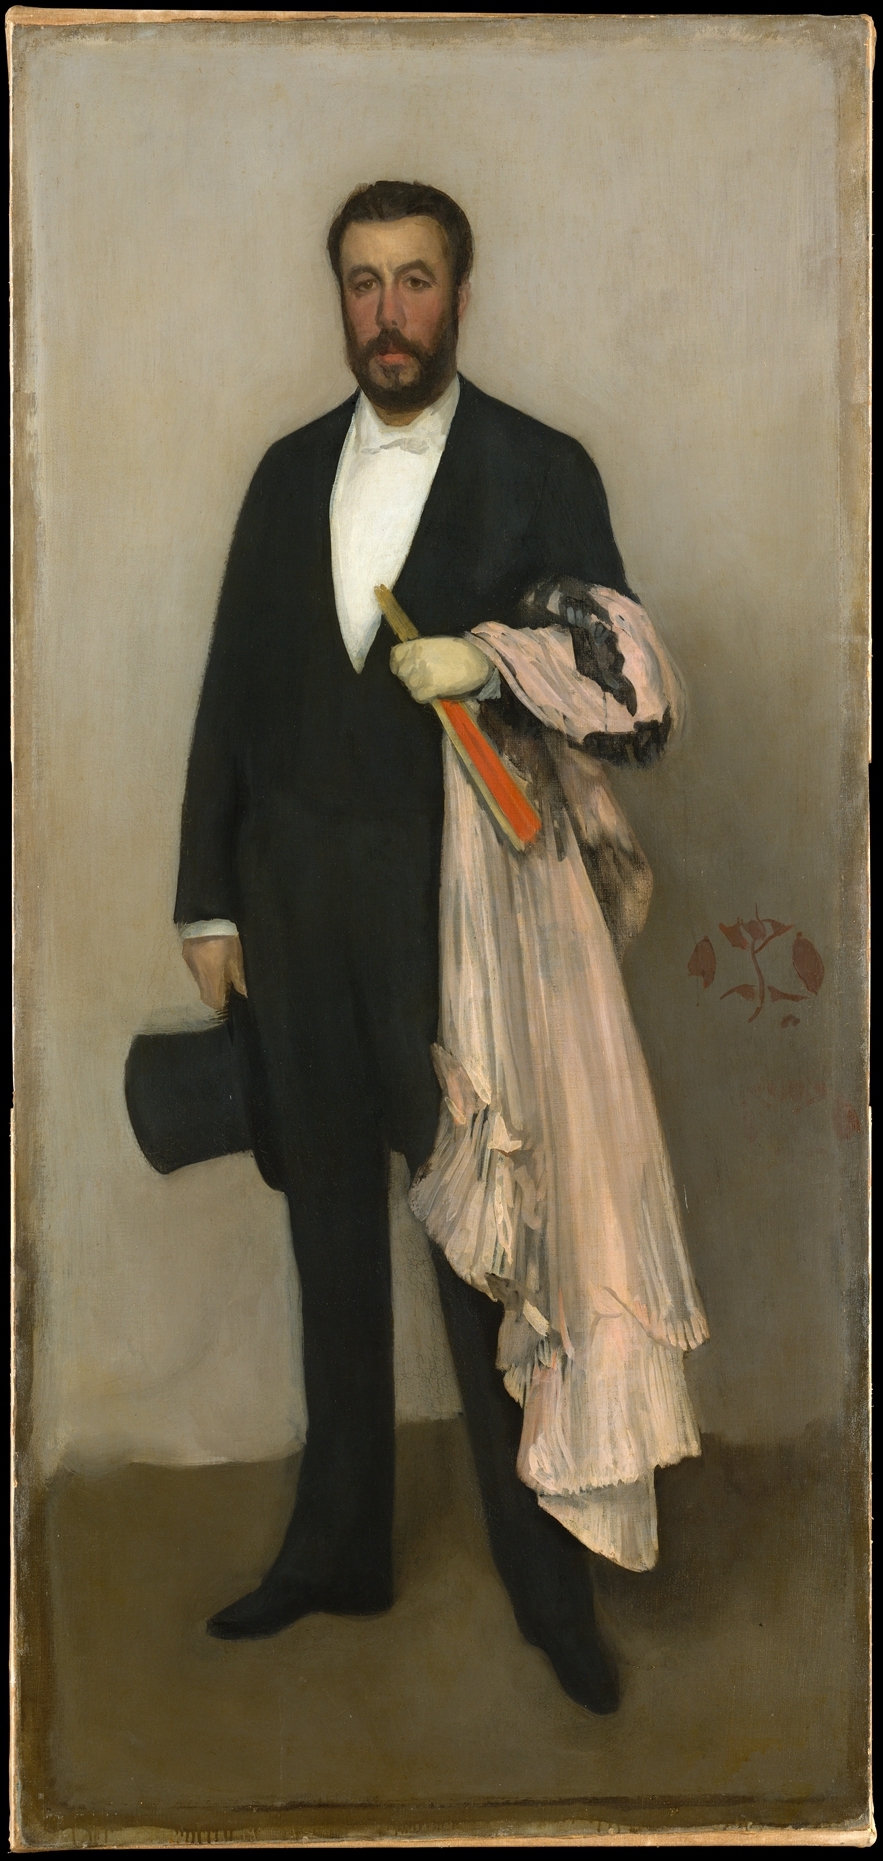 Dohoda v barvě masa a černé: Portrét Theodora Dureta by James Abbott McNeill Whistler - 1883 - 193.4 x 90.8 cm 